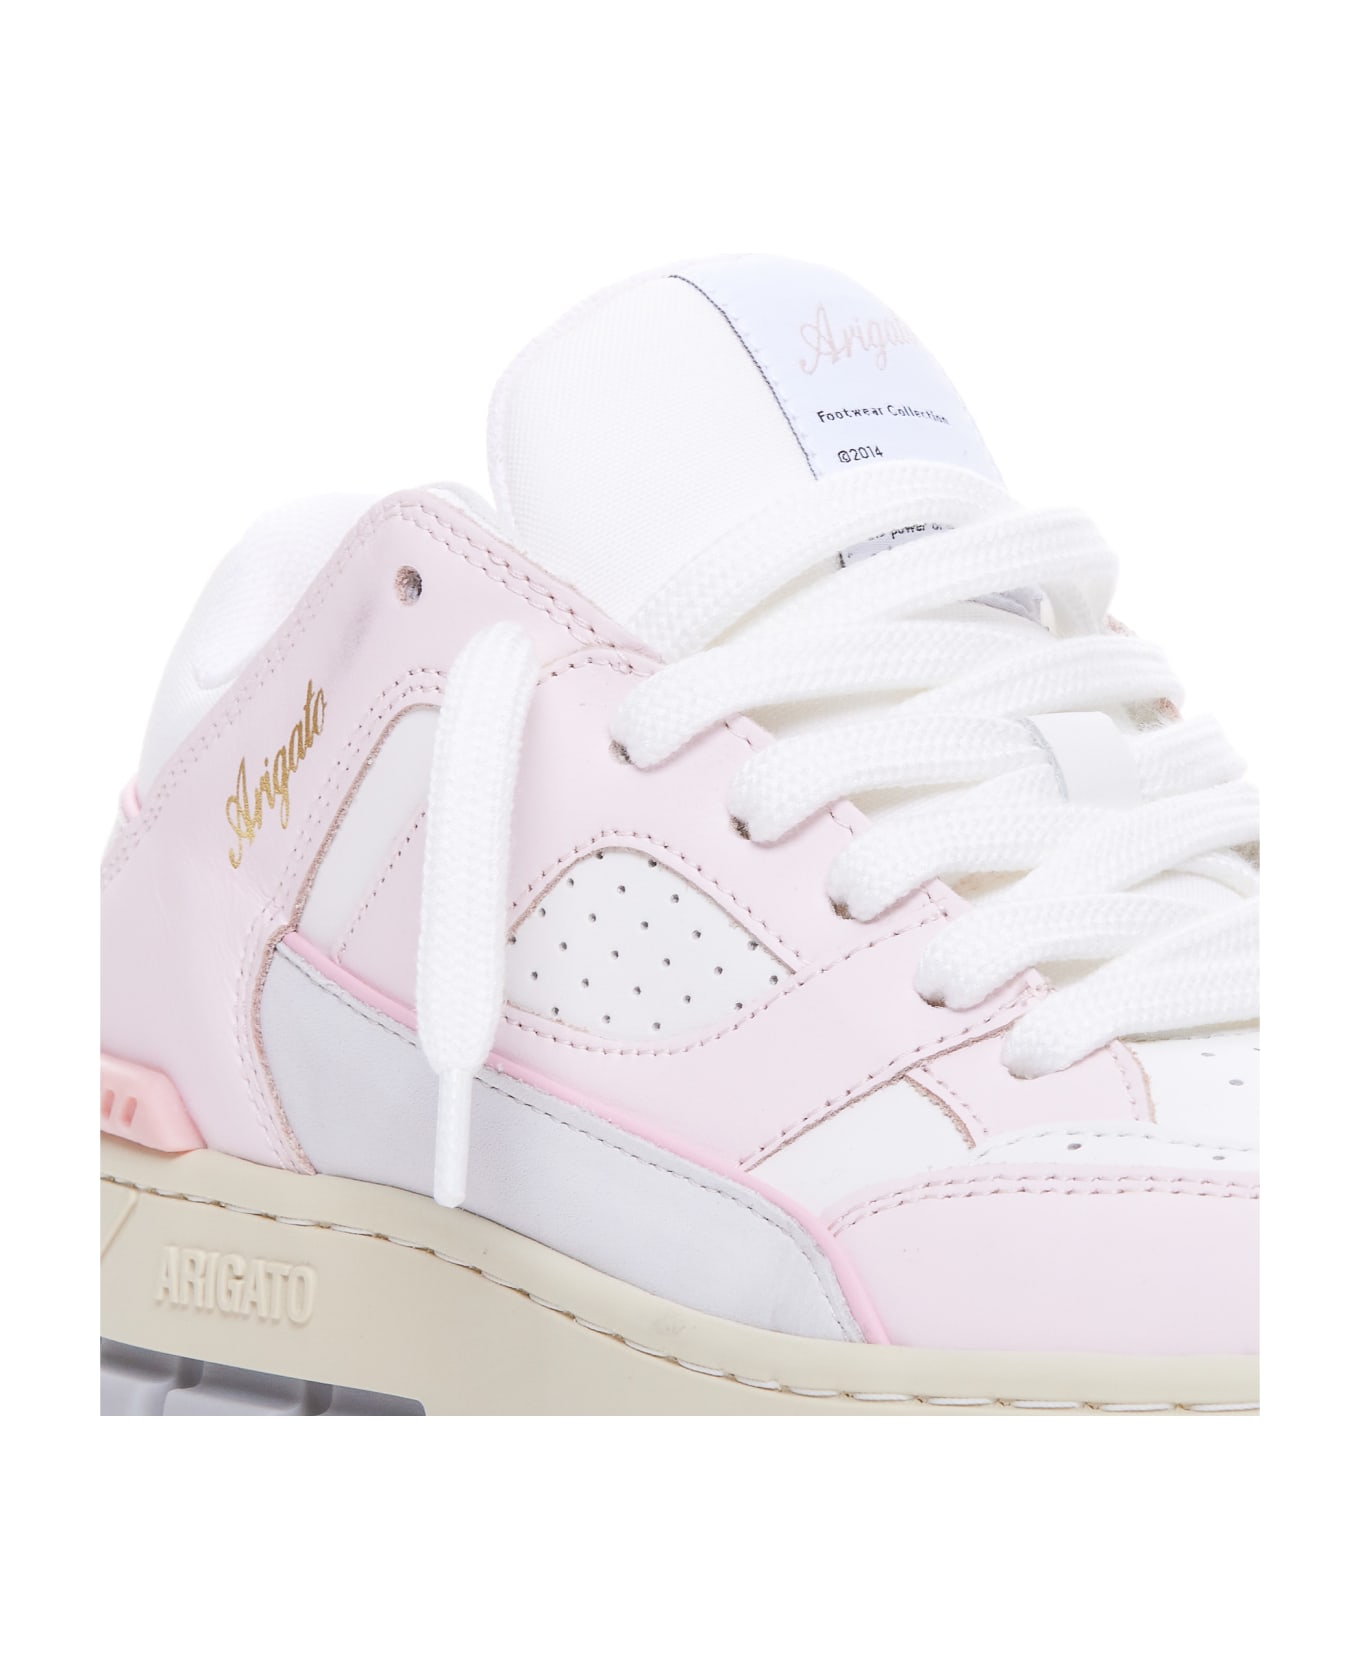 Axel Arigato Area Lo Sneakers - Pink